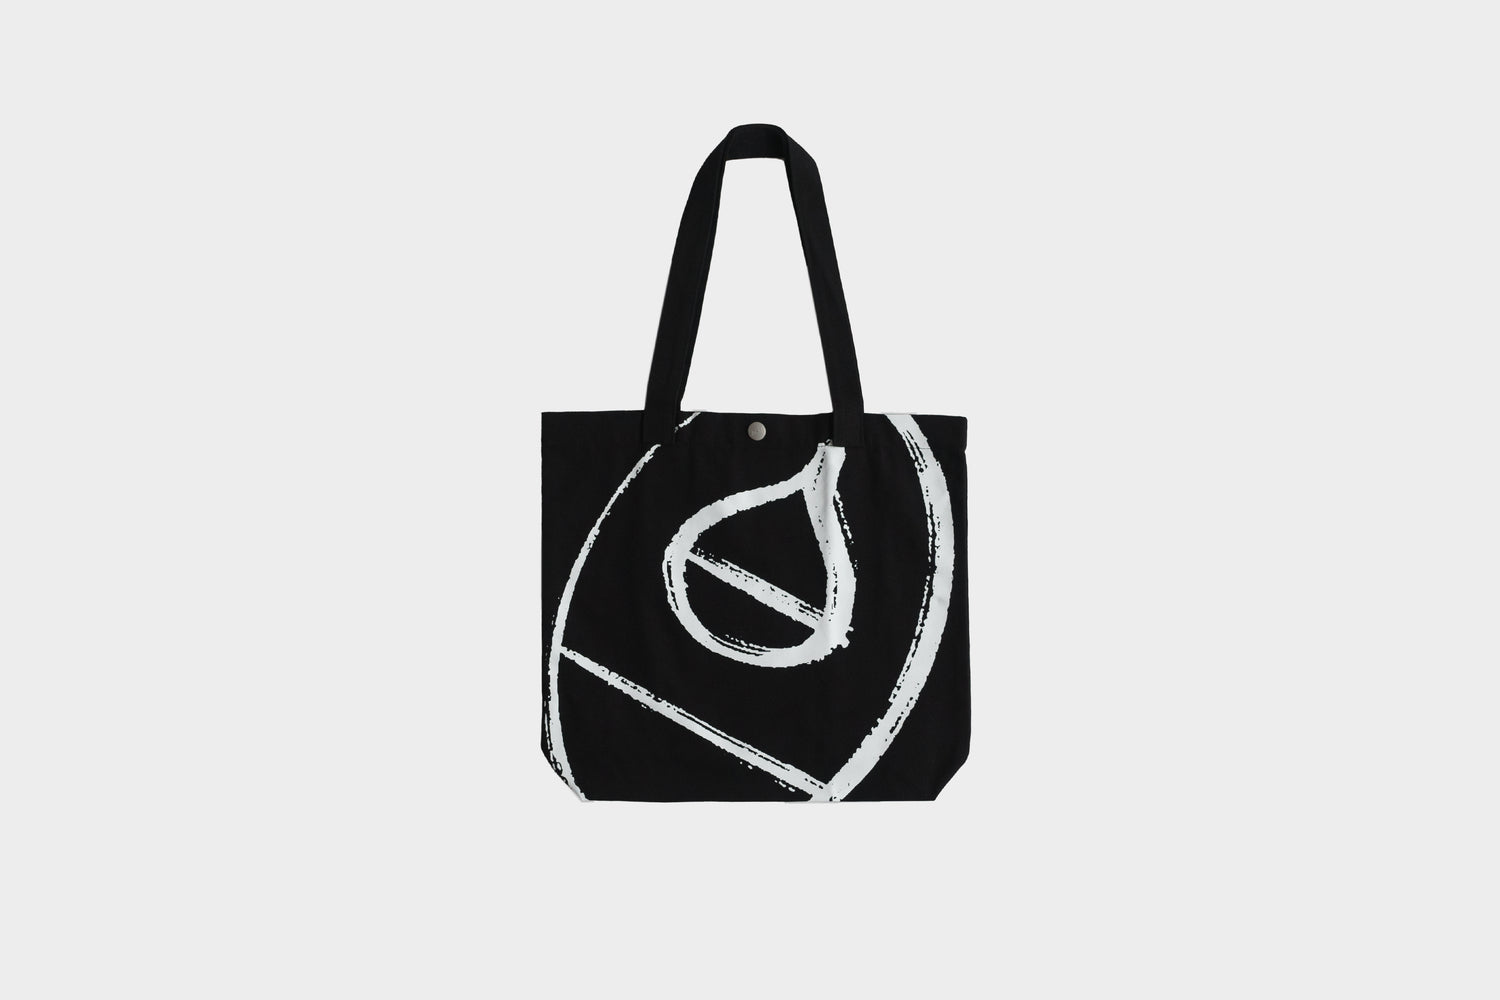 Terra Kaffe | Black tote bag with large white Terra Kaffe logo painted on